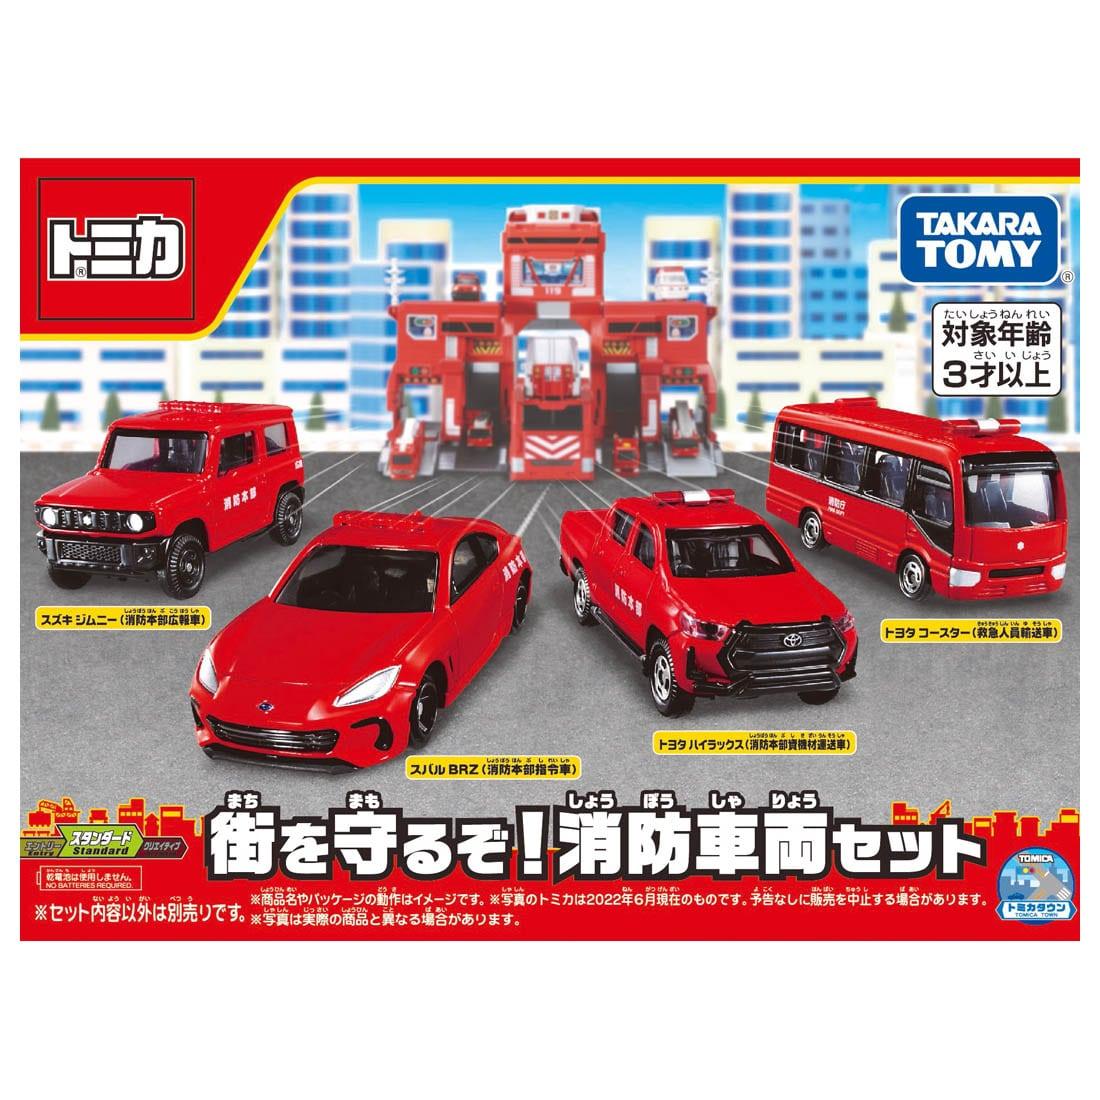 Tomica Collectors Edition Set - GTR, Honda, Toyota 86 & more - JDM Global Warehouse